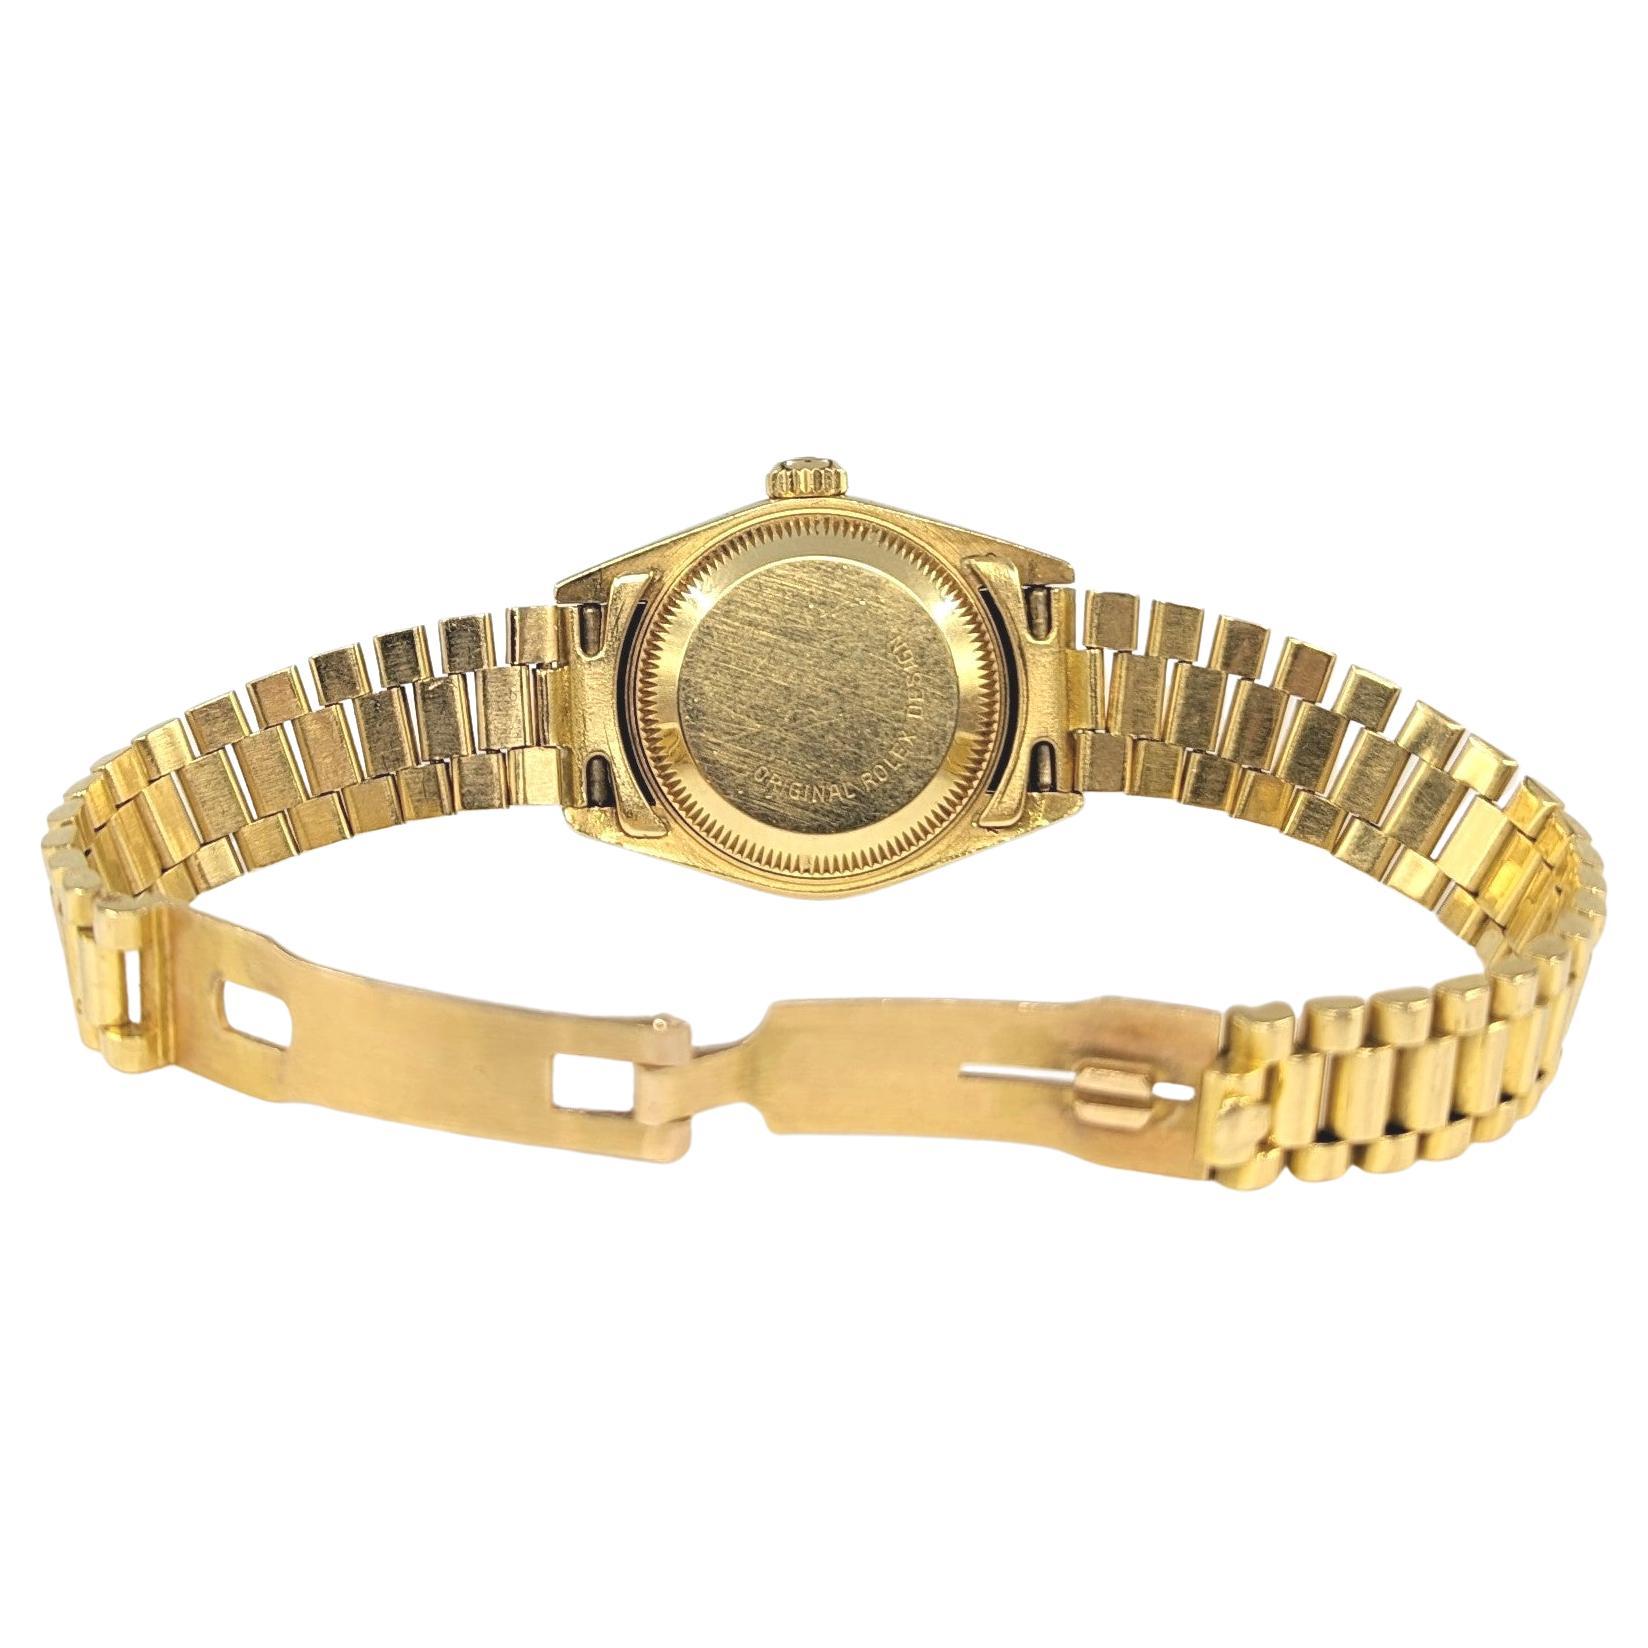 Women's Ladies Rolex 18k Presidential Bracelet Watch Solid Gold Diamond Dial ref 69178 For Sale